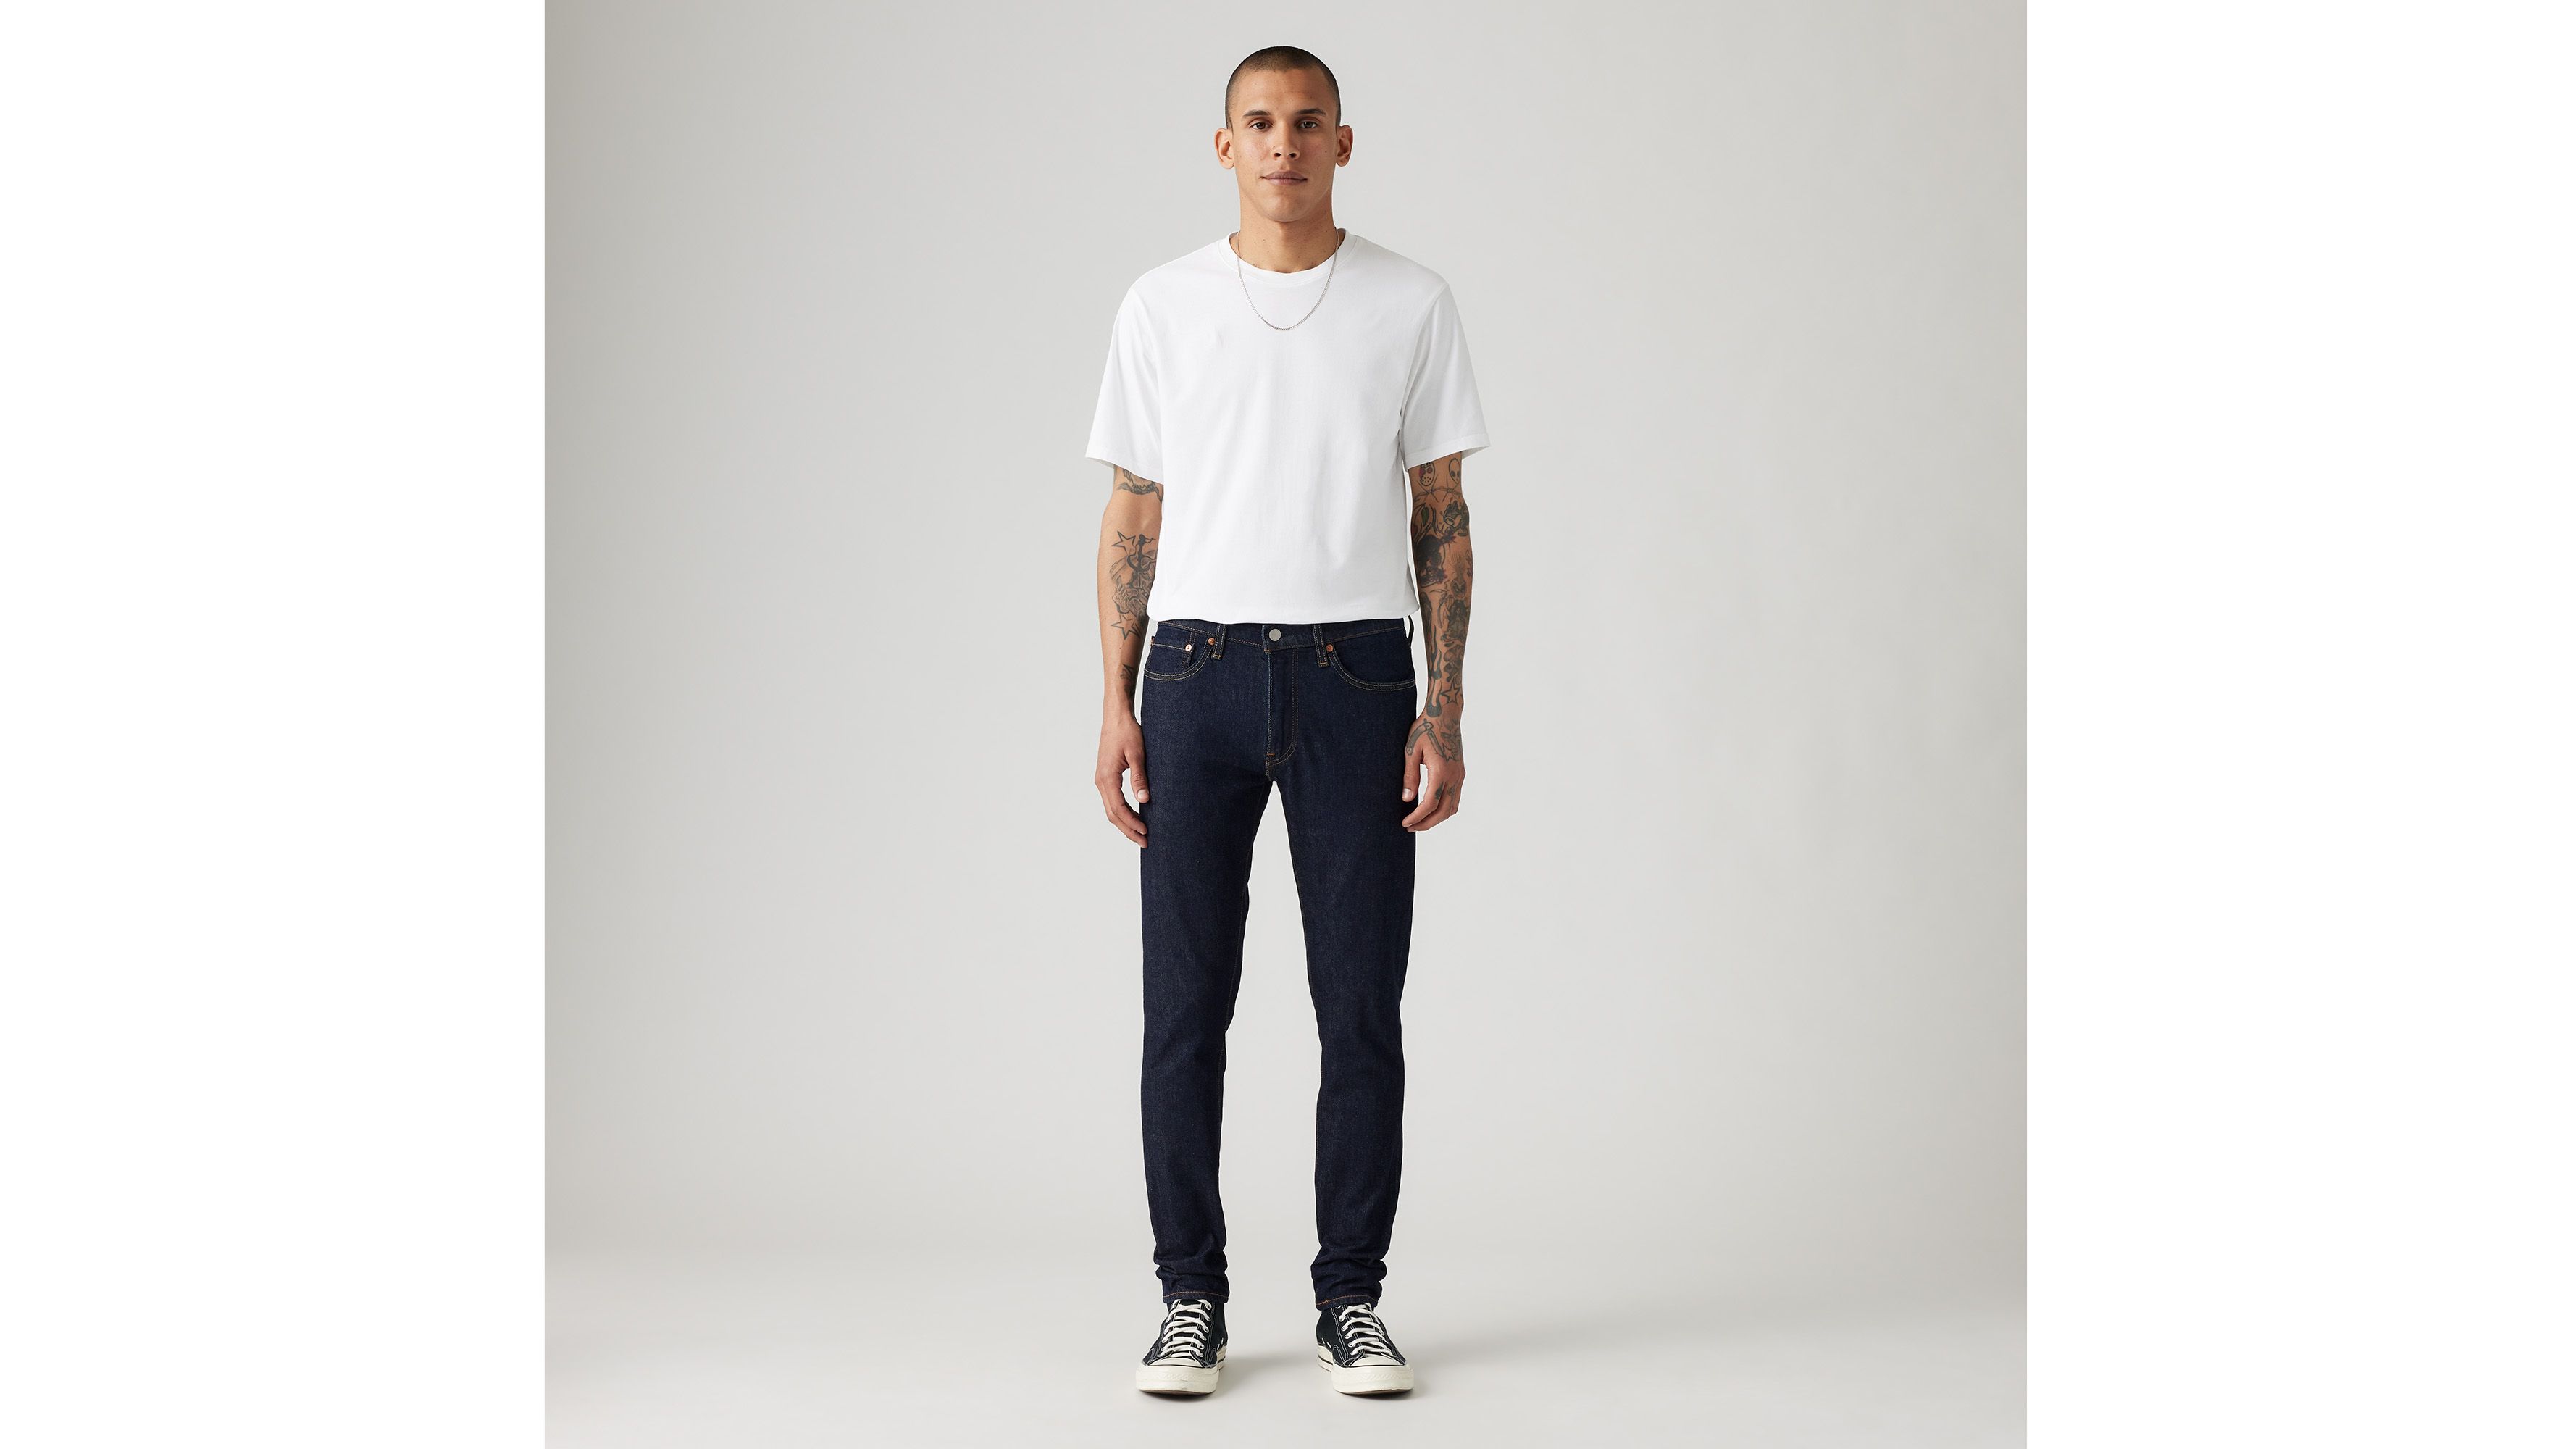 512™ Slim Taper Levi's® Flex Men's Jeans - Dark Wash | Levi's® US